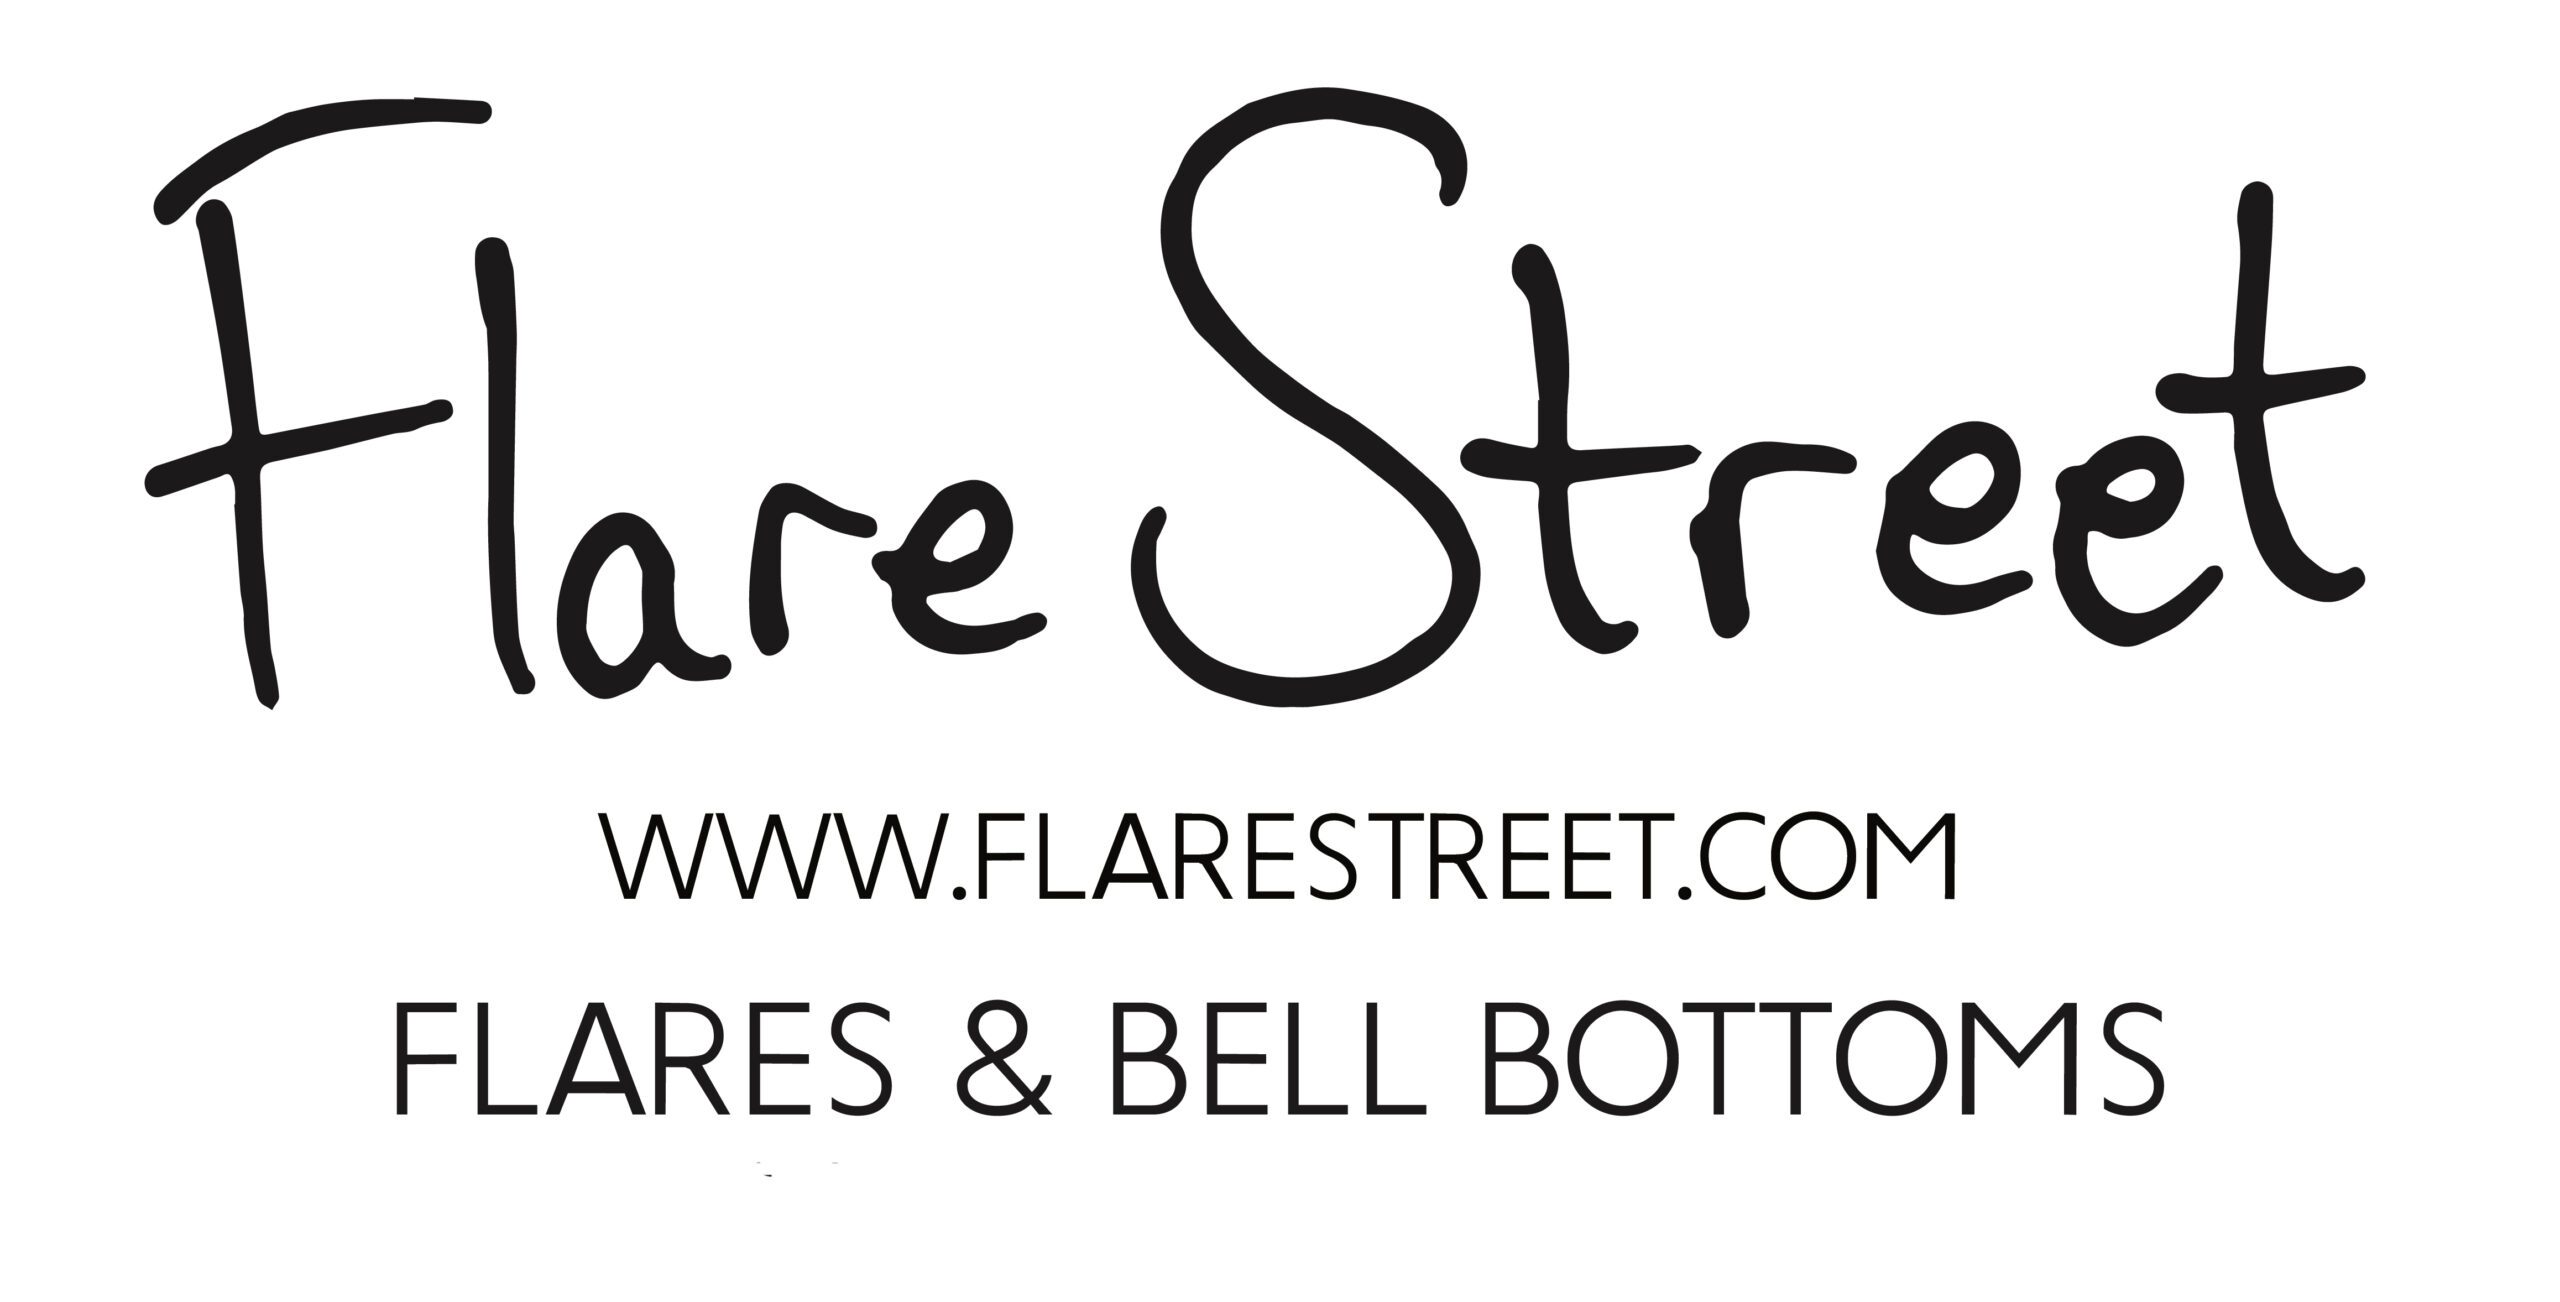 Flare street logo